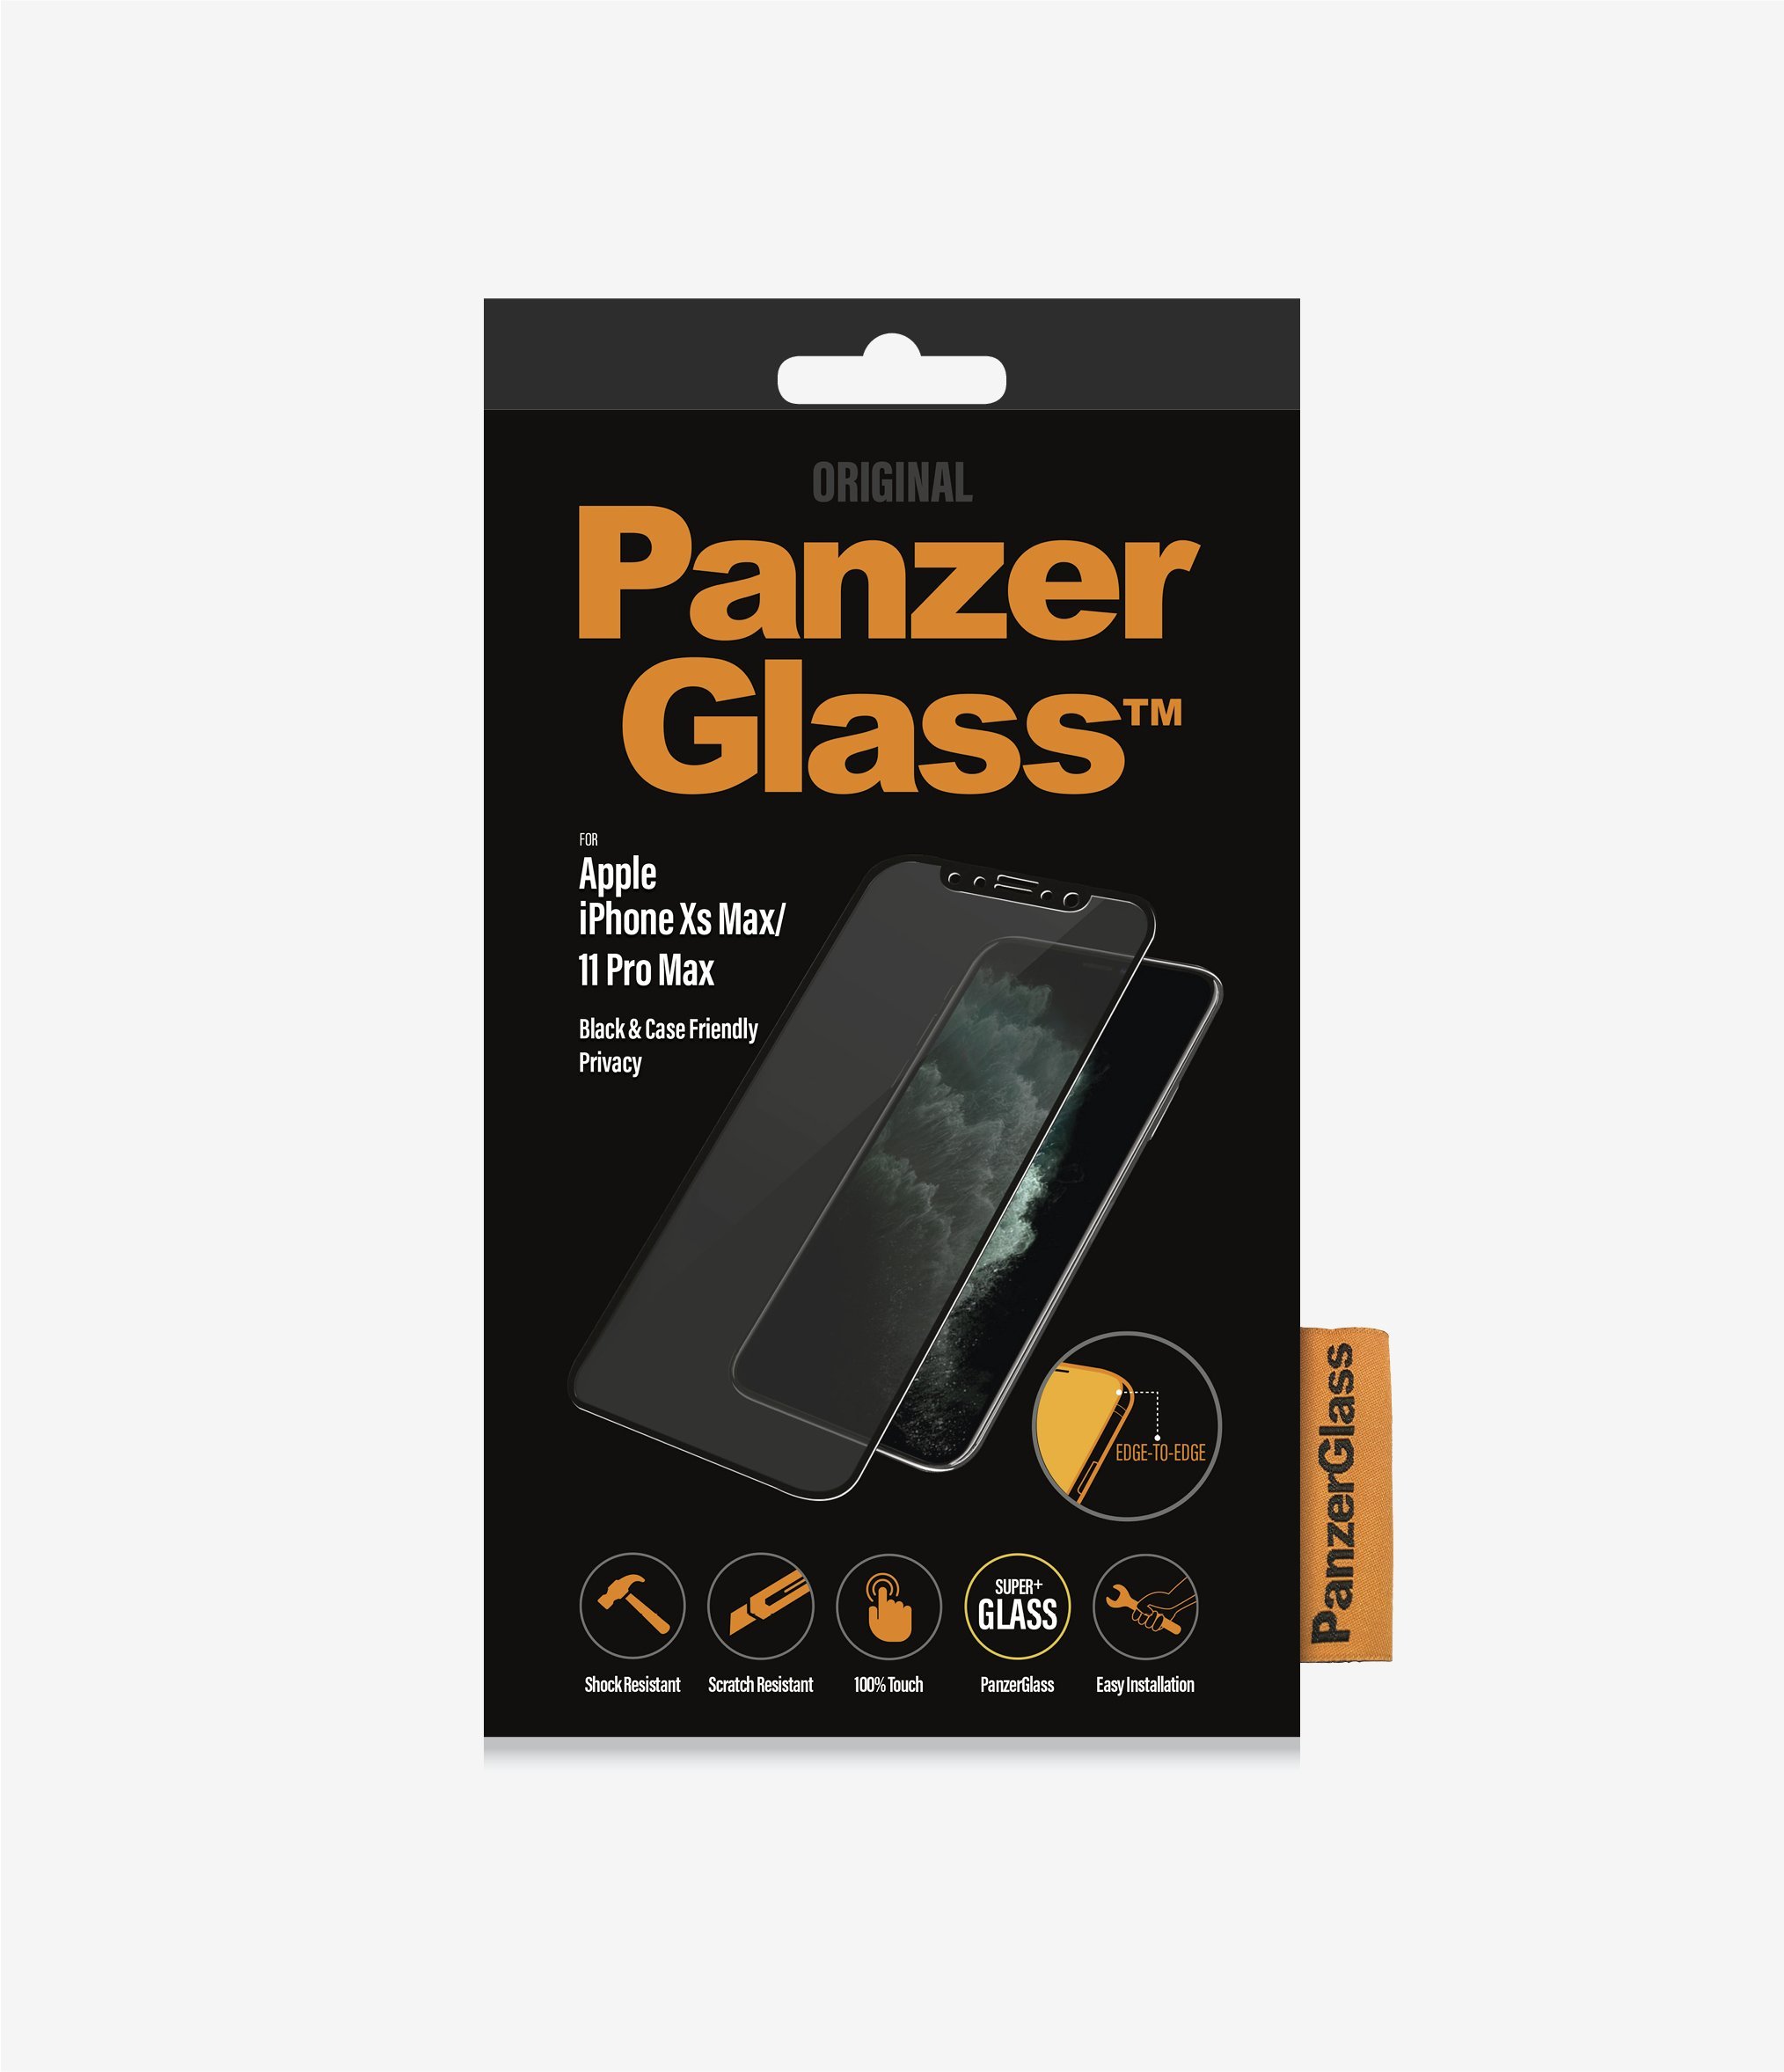 PanzerGlass™ Apple iPhone Xs Max / 11 Pro Max - Privacy (P2666), Privacy filter, Anti-glare coating, Blue light reduction, Original PanzerGlass™